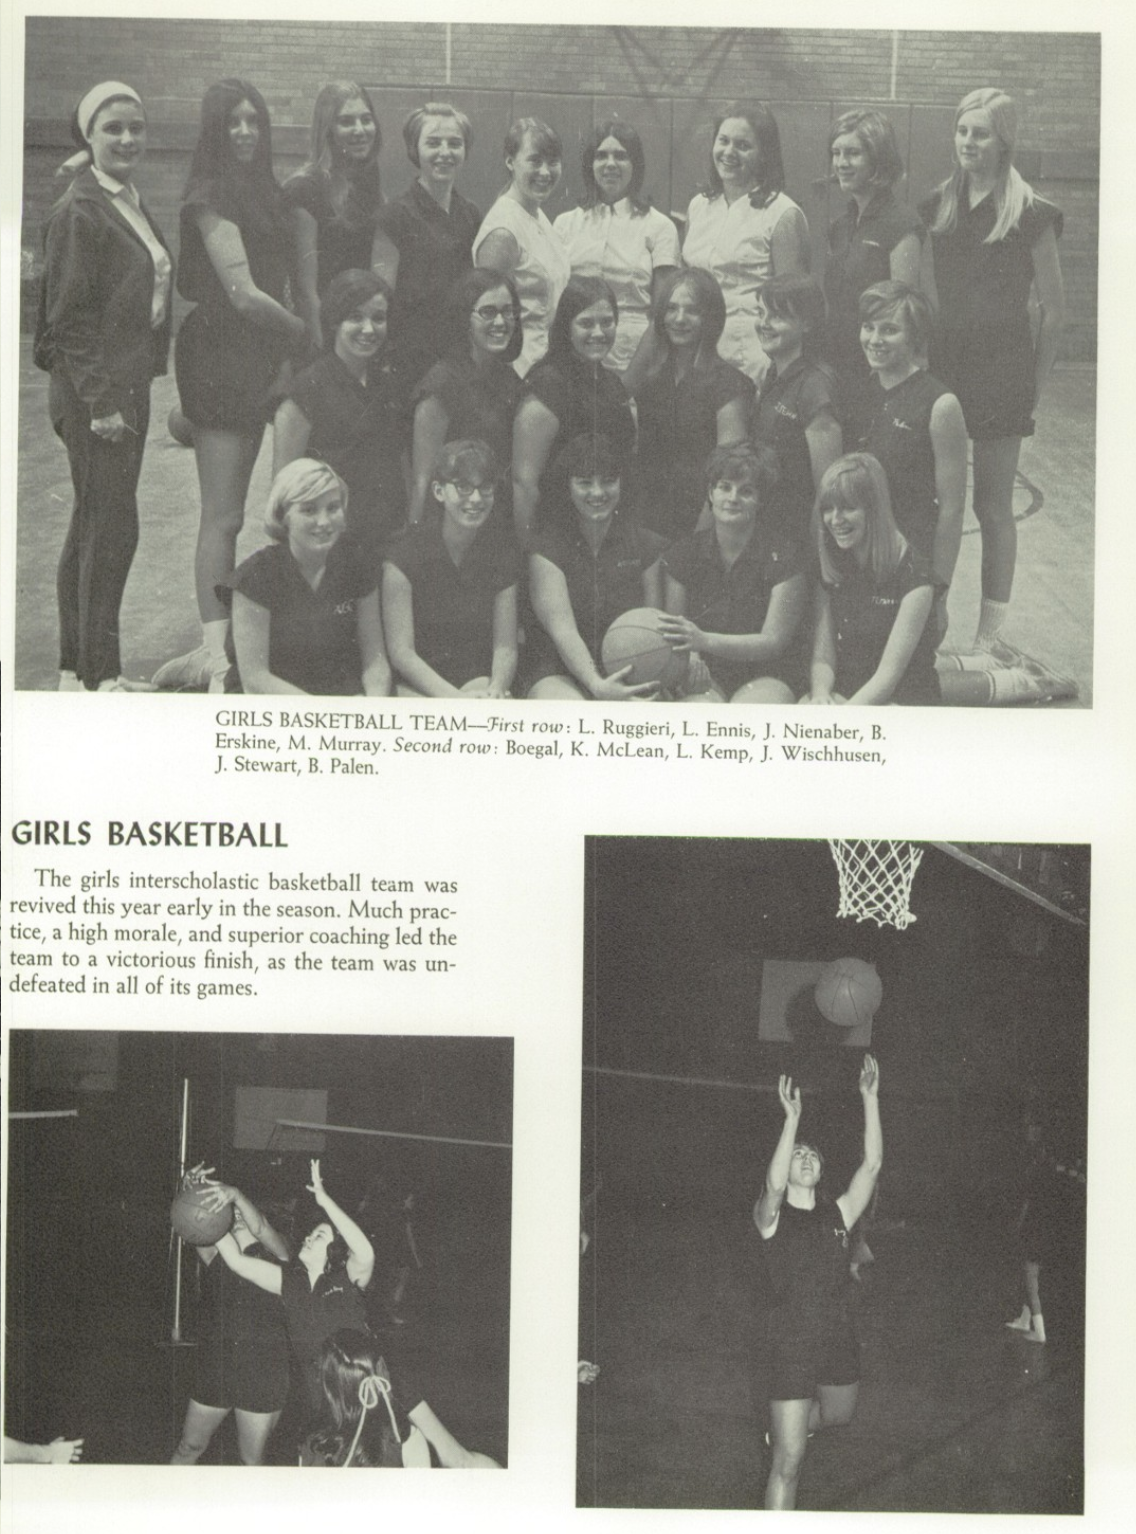 1969 Girls’ Basketball Team